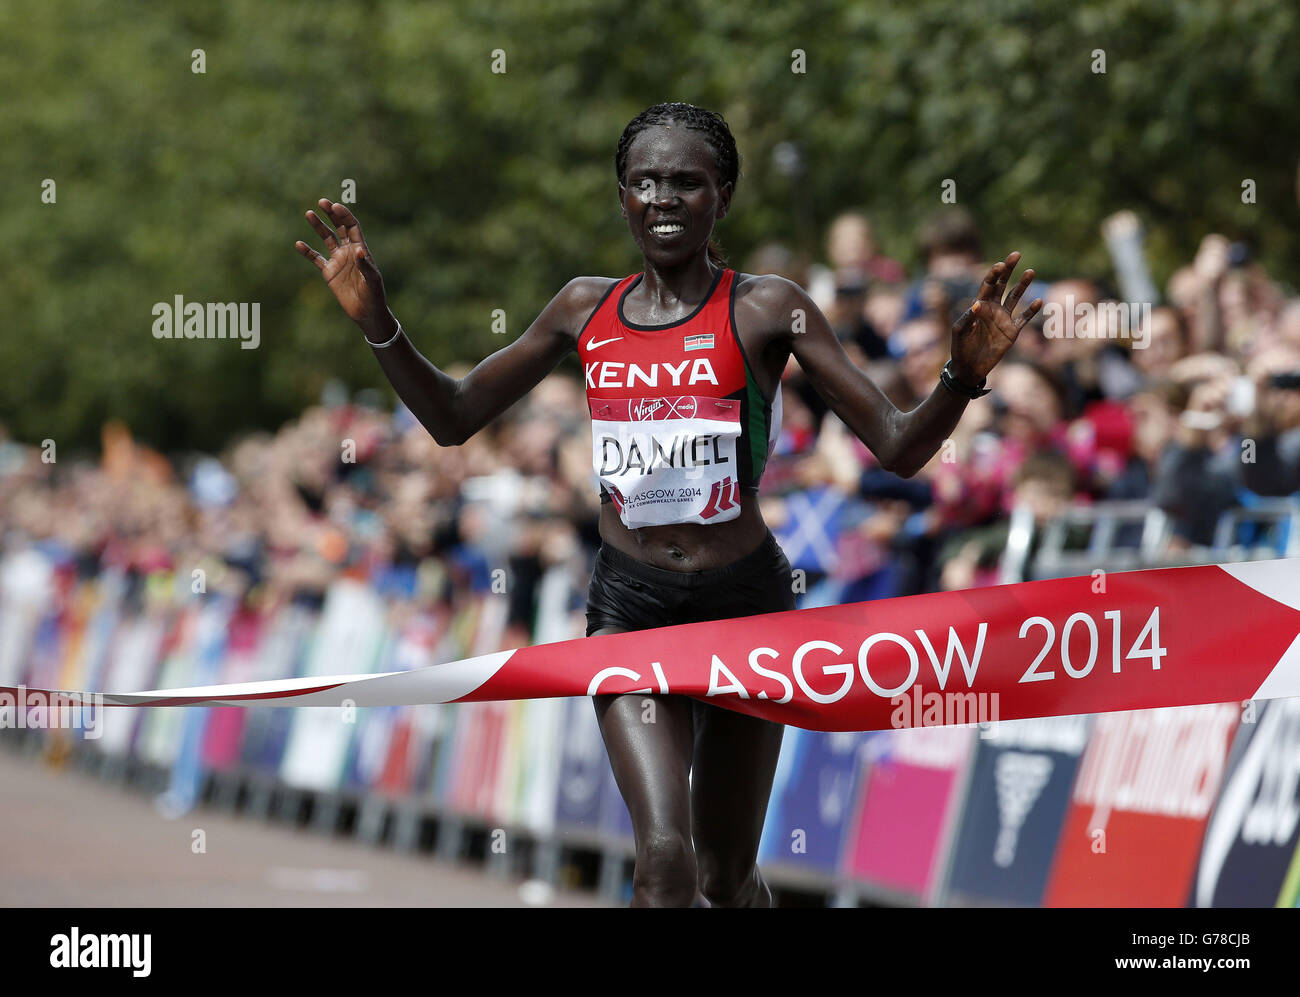 Kenya's Flomena Cheyech Daniel celebrates winning the women's marathon during the 2014 Commonwealth Games in Glasgow. Stock Photo